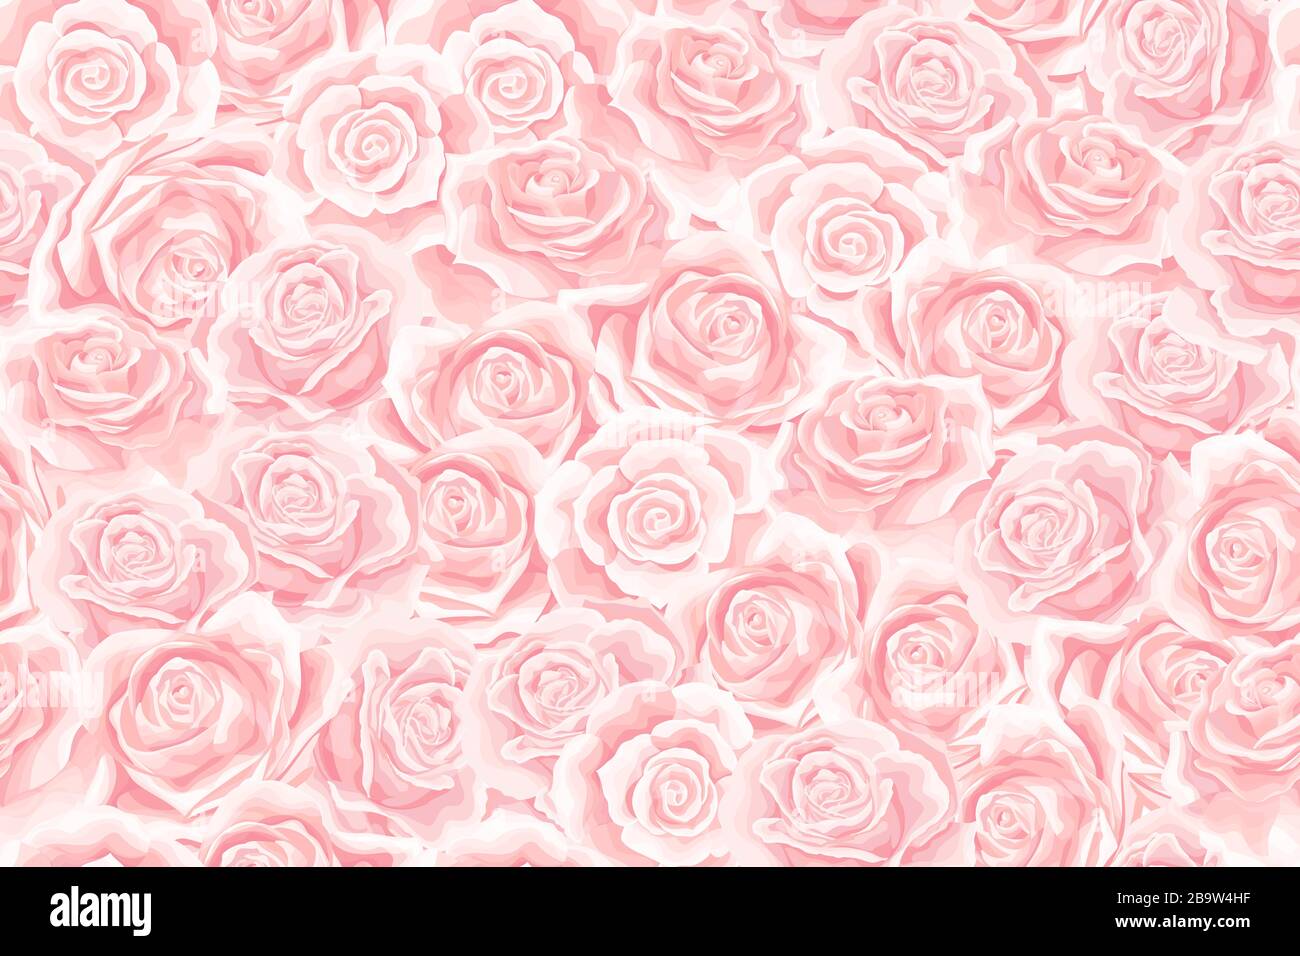 https://c8.alamy.com/comp/2B9W4HF/cream-pink-rose-flower-seamless-pattern-background-texture-for-printing-textile-2B9W4HF.jpg